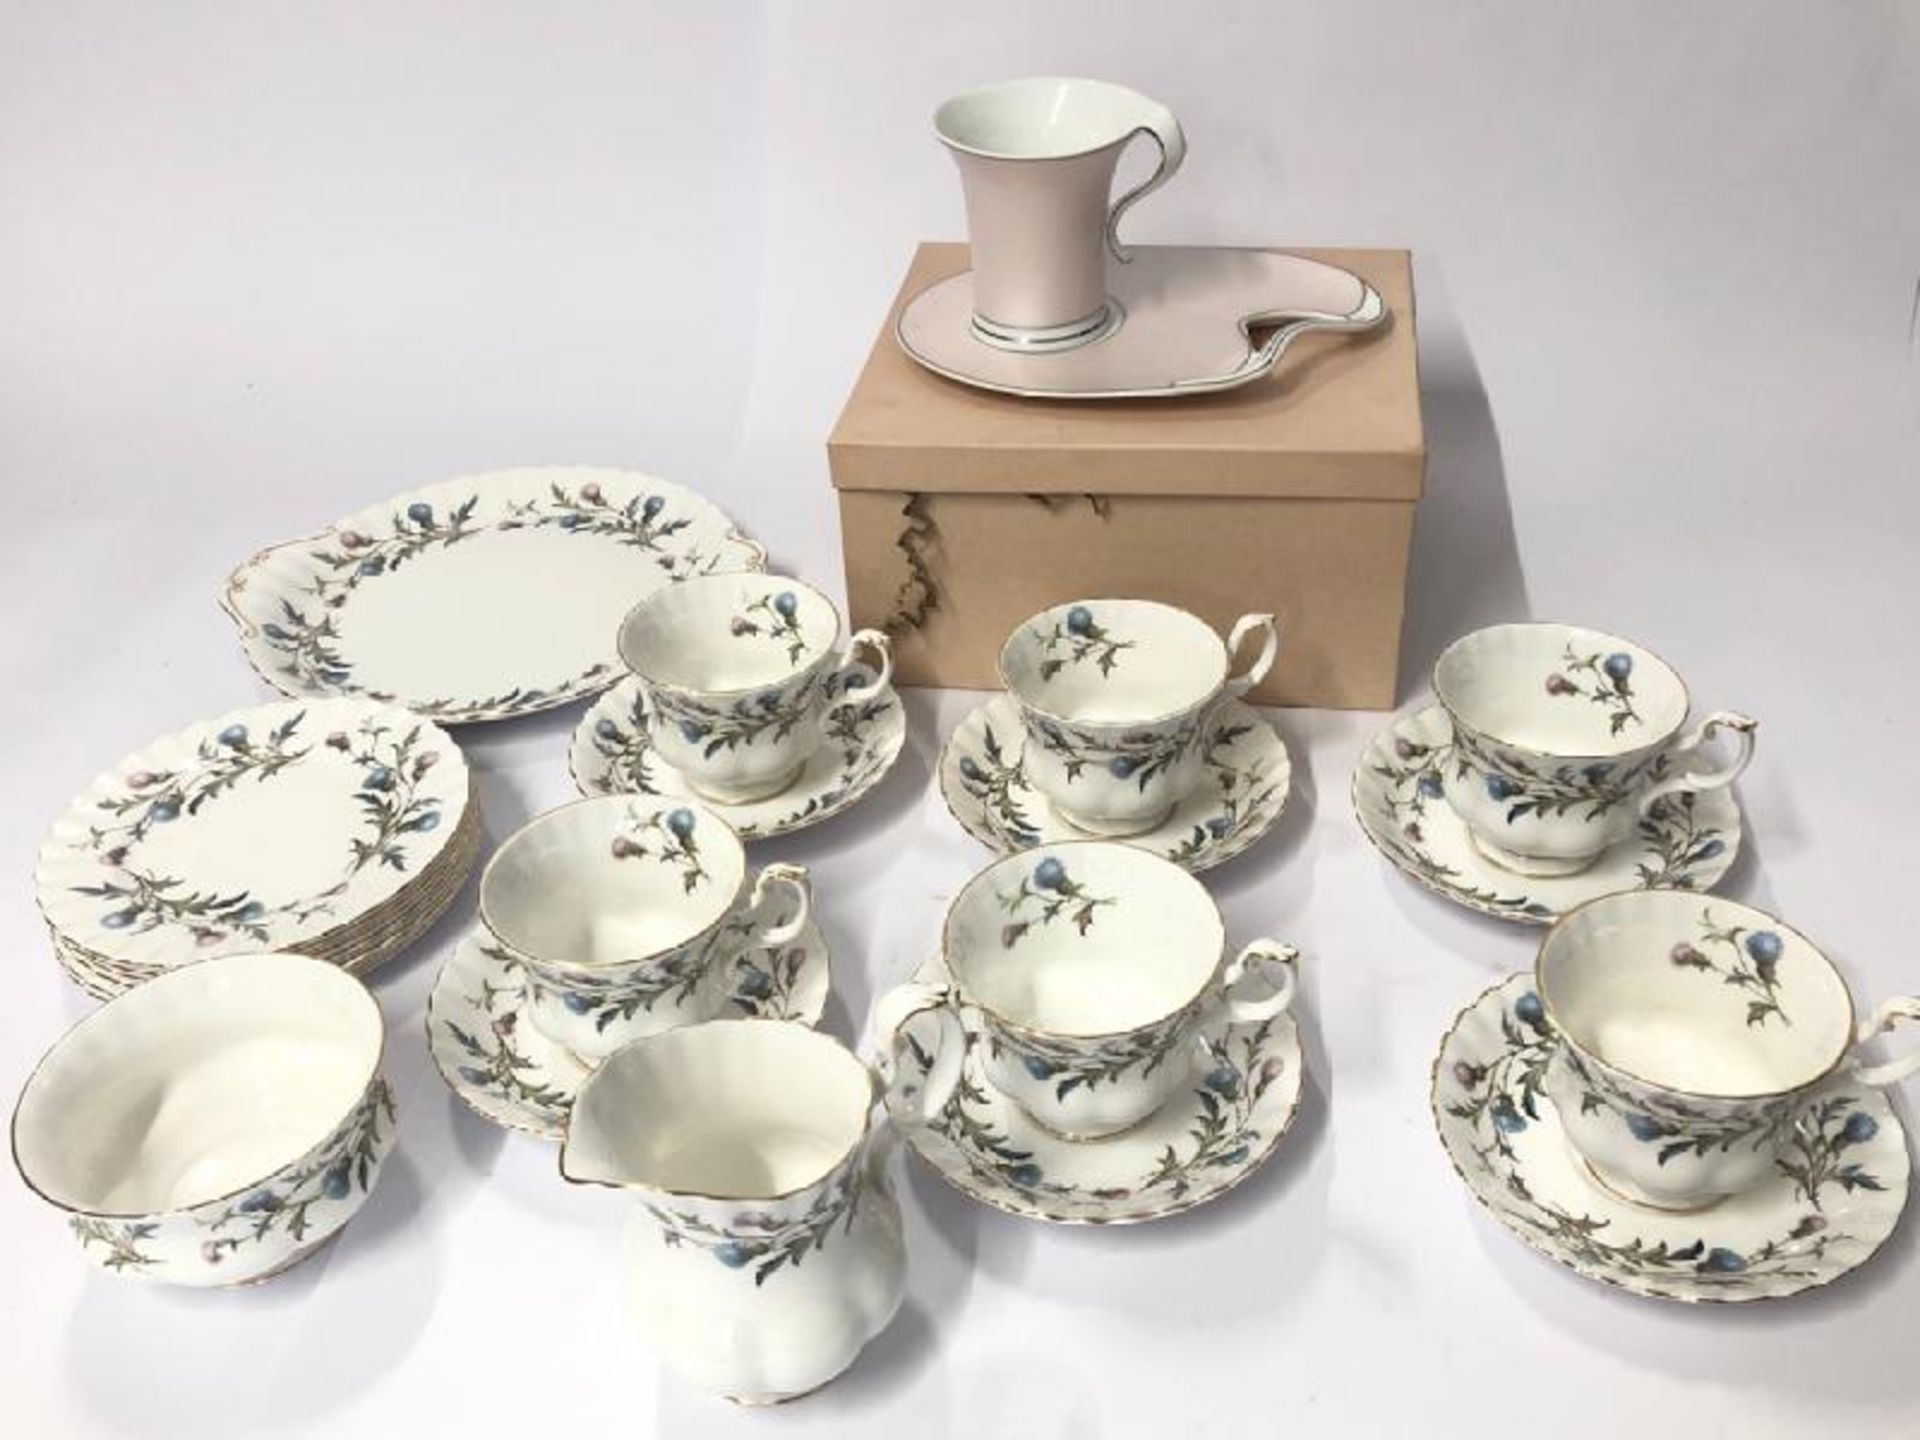 A boxed Leonardo Collection cup and saucer set with a part Royal Albert " Brigadoon" tea set